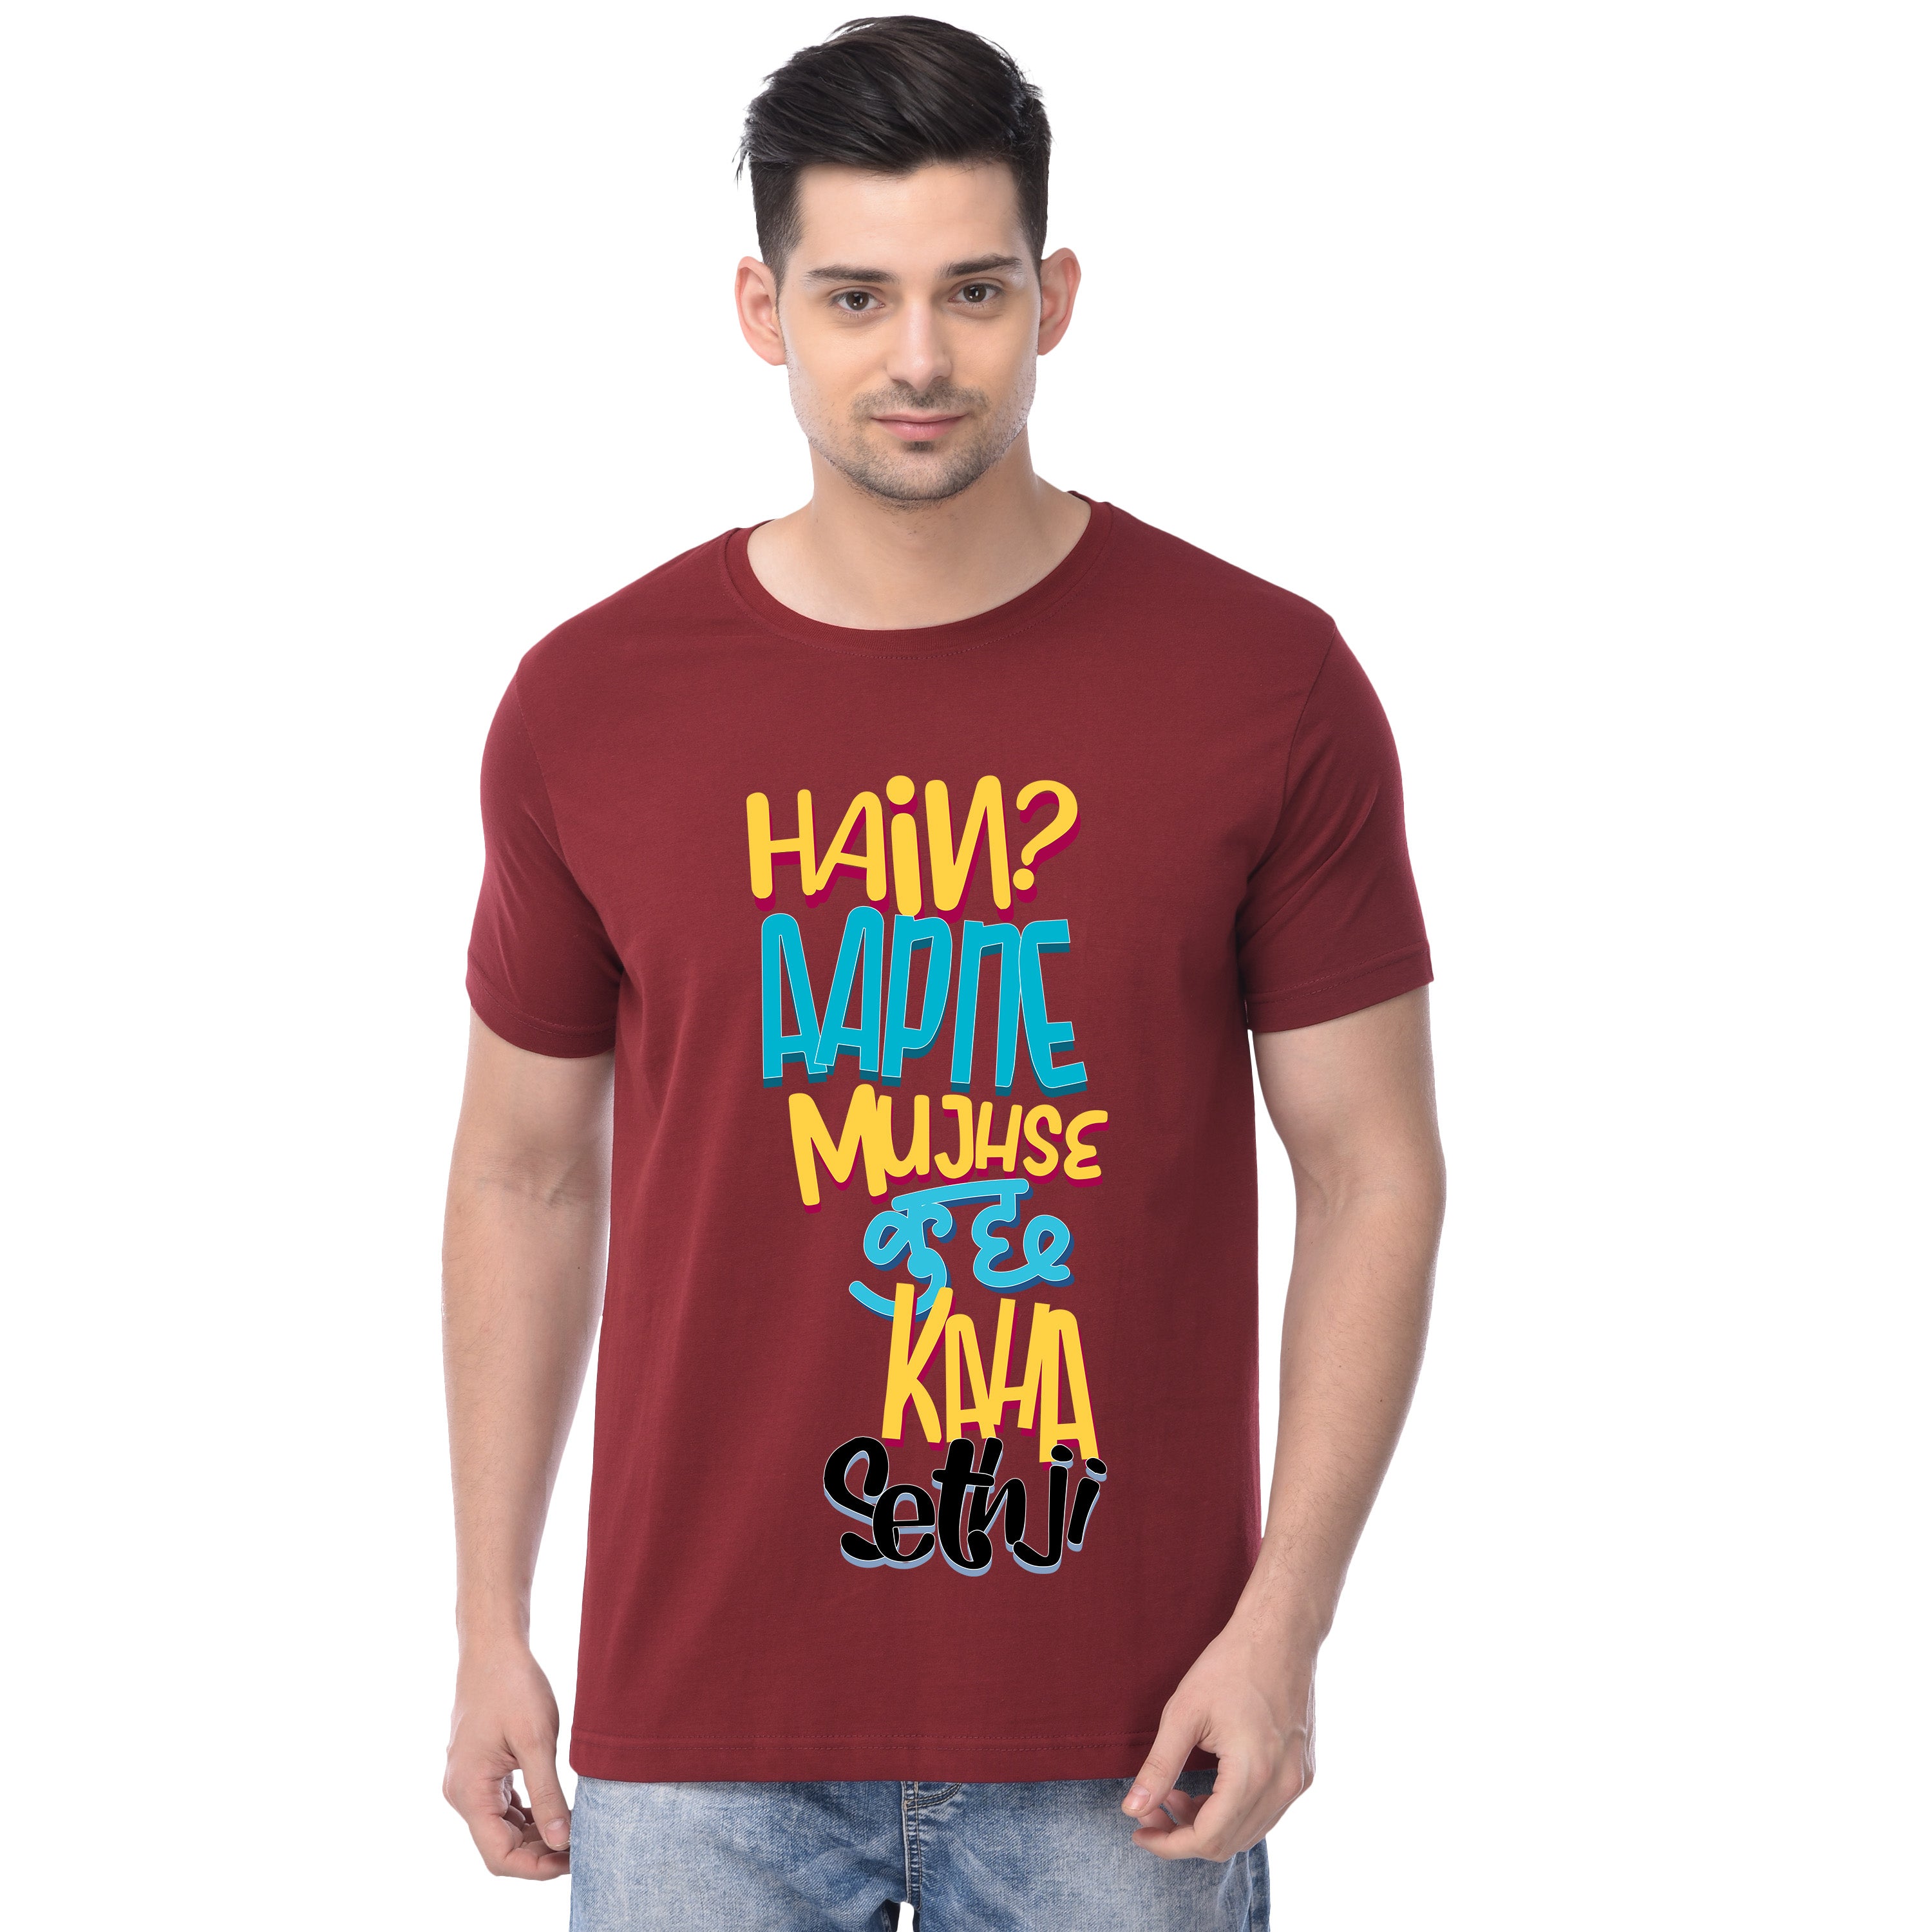 Aapne Mujhse Kuch Kaha Sethii? - Natukaka Maroon T-shirt